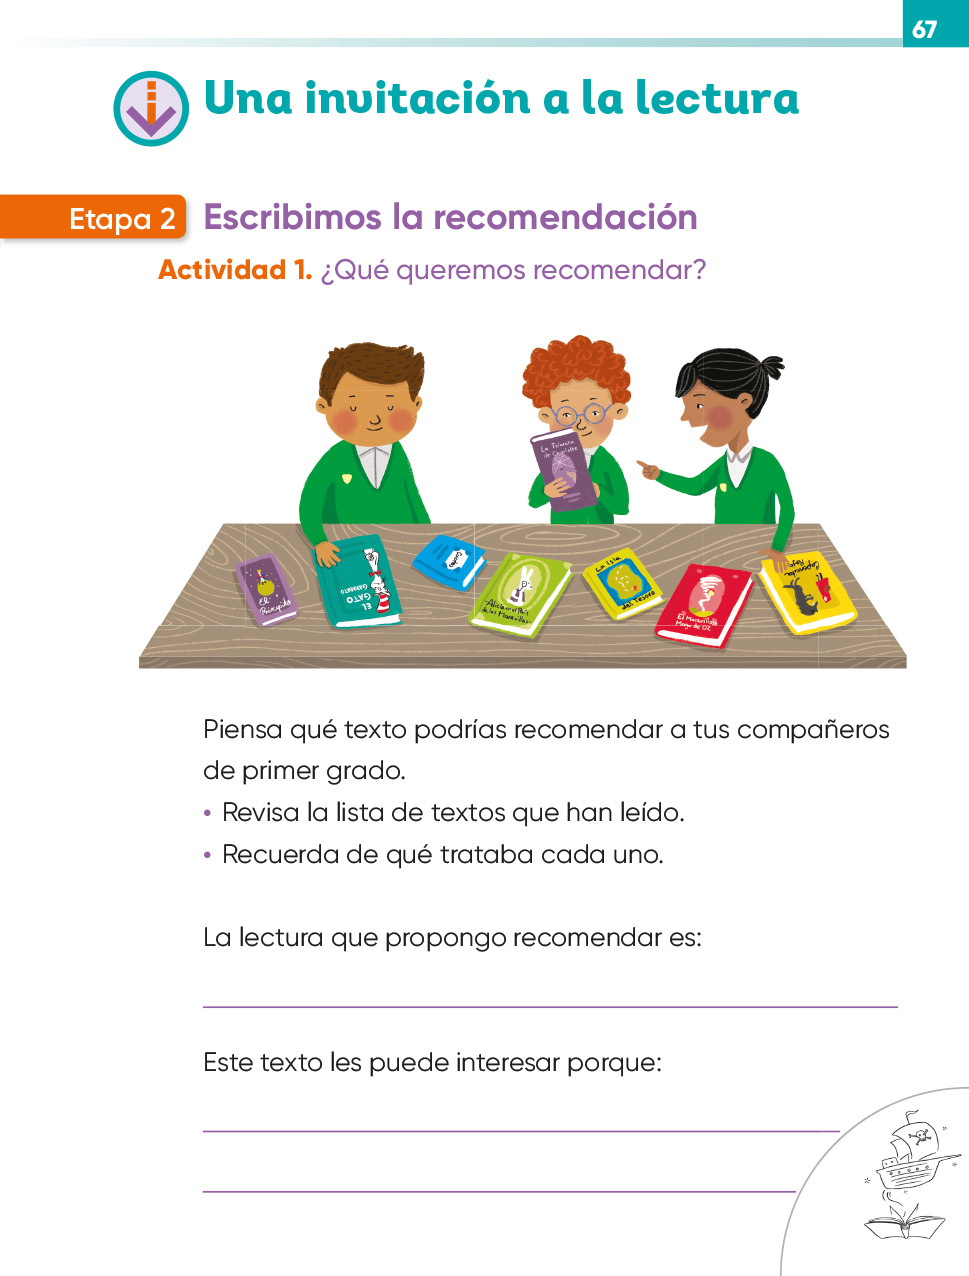 Lengua Materna Español Segundo Grado 2020 2021 Página 67 De 225 Libros De Texto Online 5598